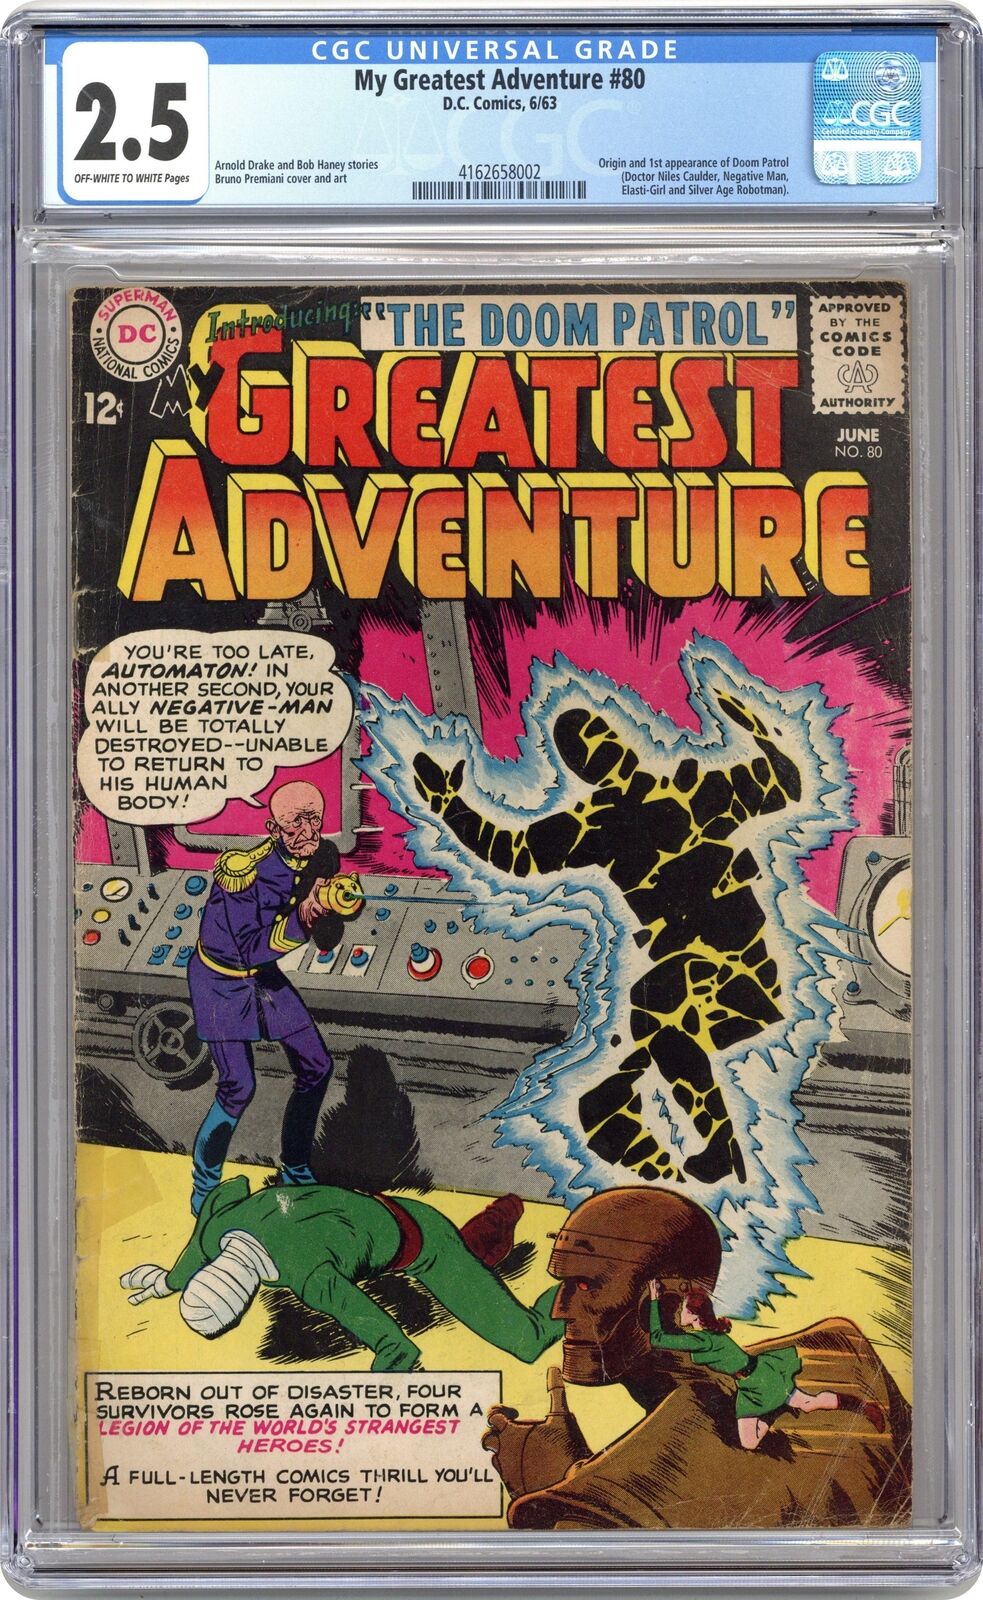 My Greatest Adventure #80 CGC 2.5 1963 4162658002